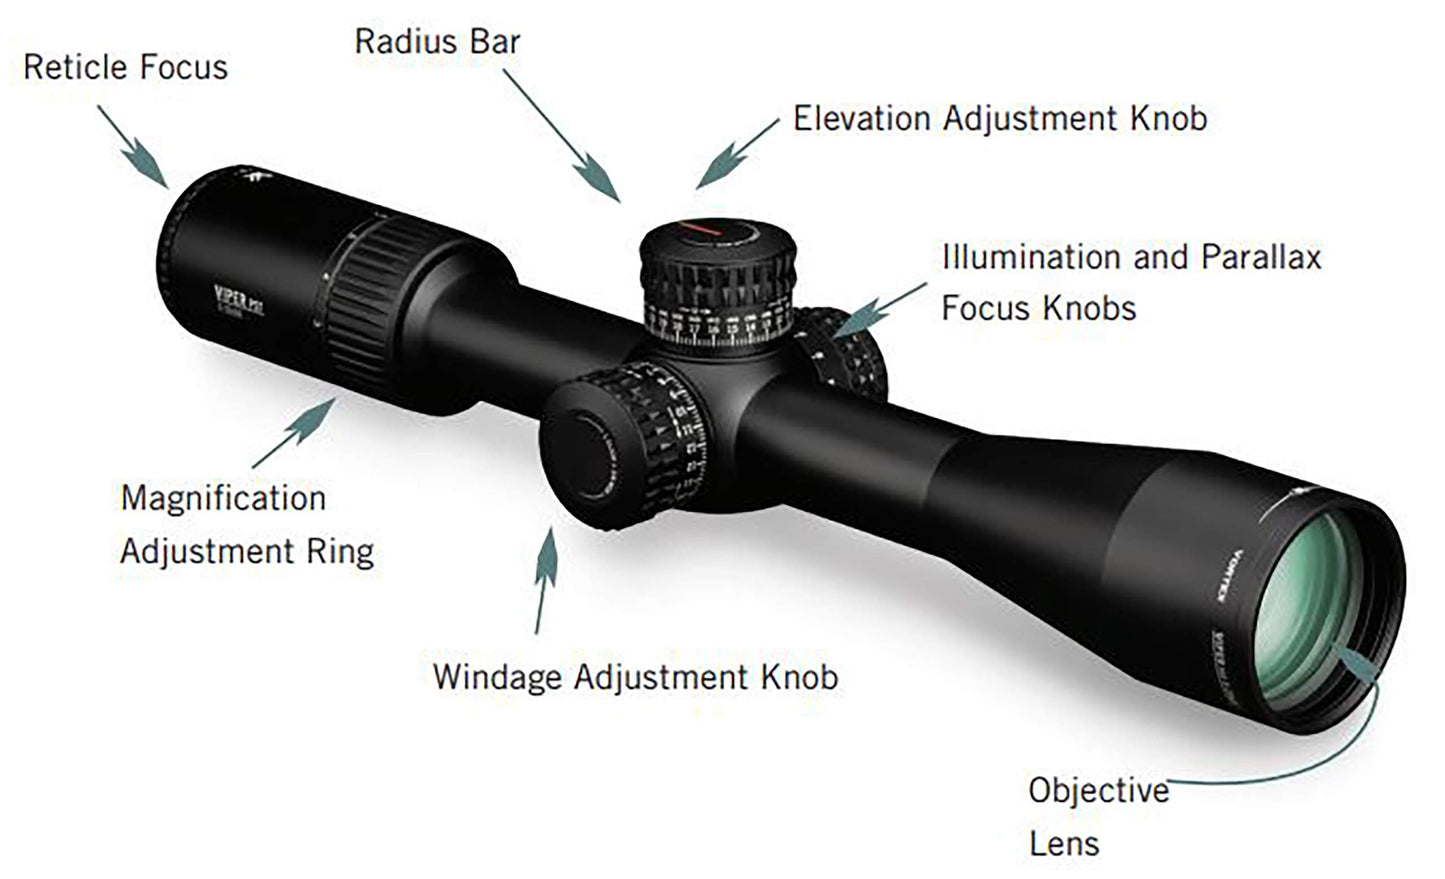 Vortex Optics Viper PST Gen II 5-25x50 Second Focal Plane Riflescope - PST-5251